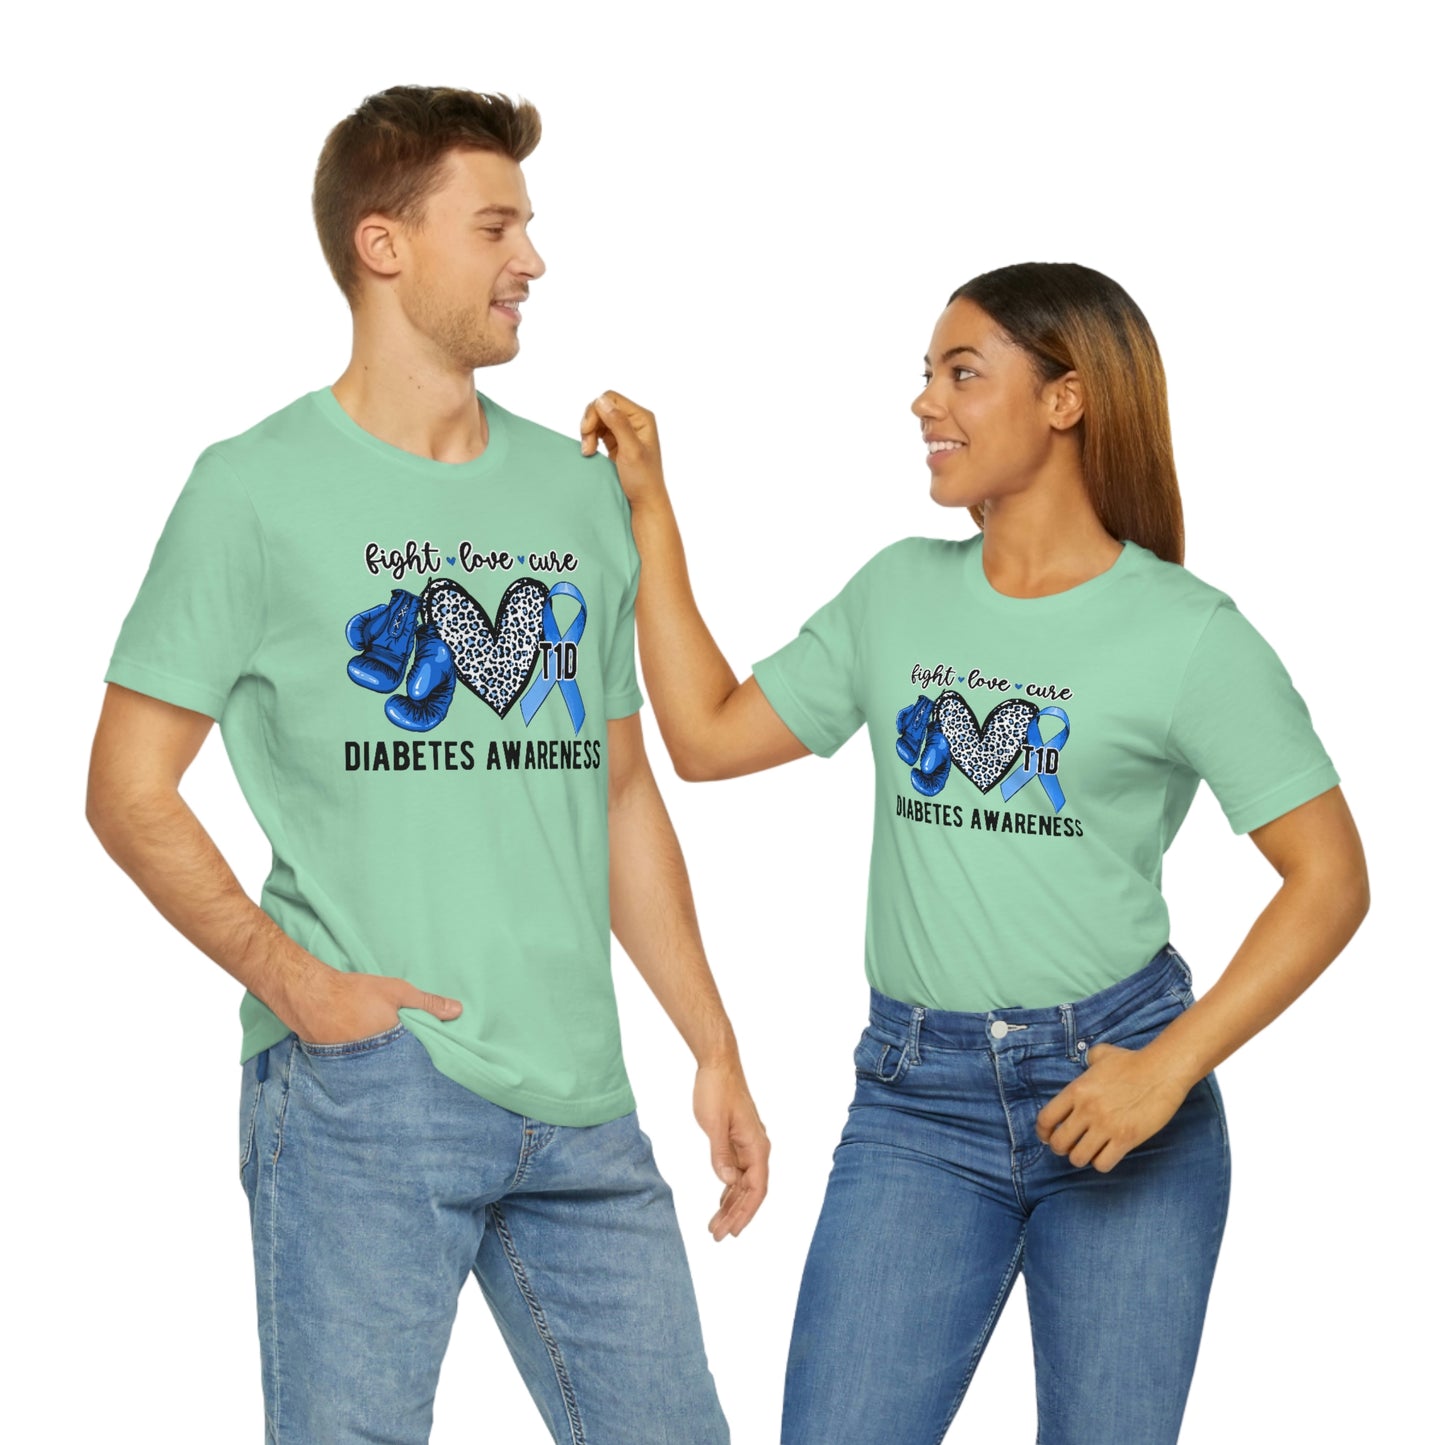 Fight Love Cure T1D Diabetes Awareness Print Unisex Jersey Short Sleeve Tee